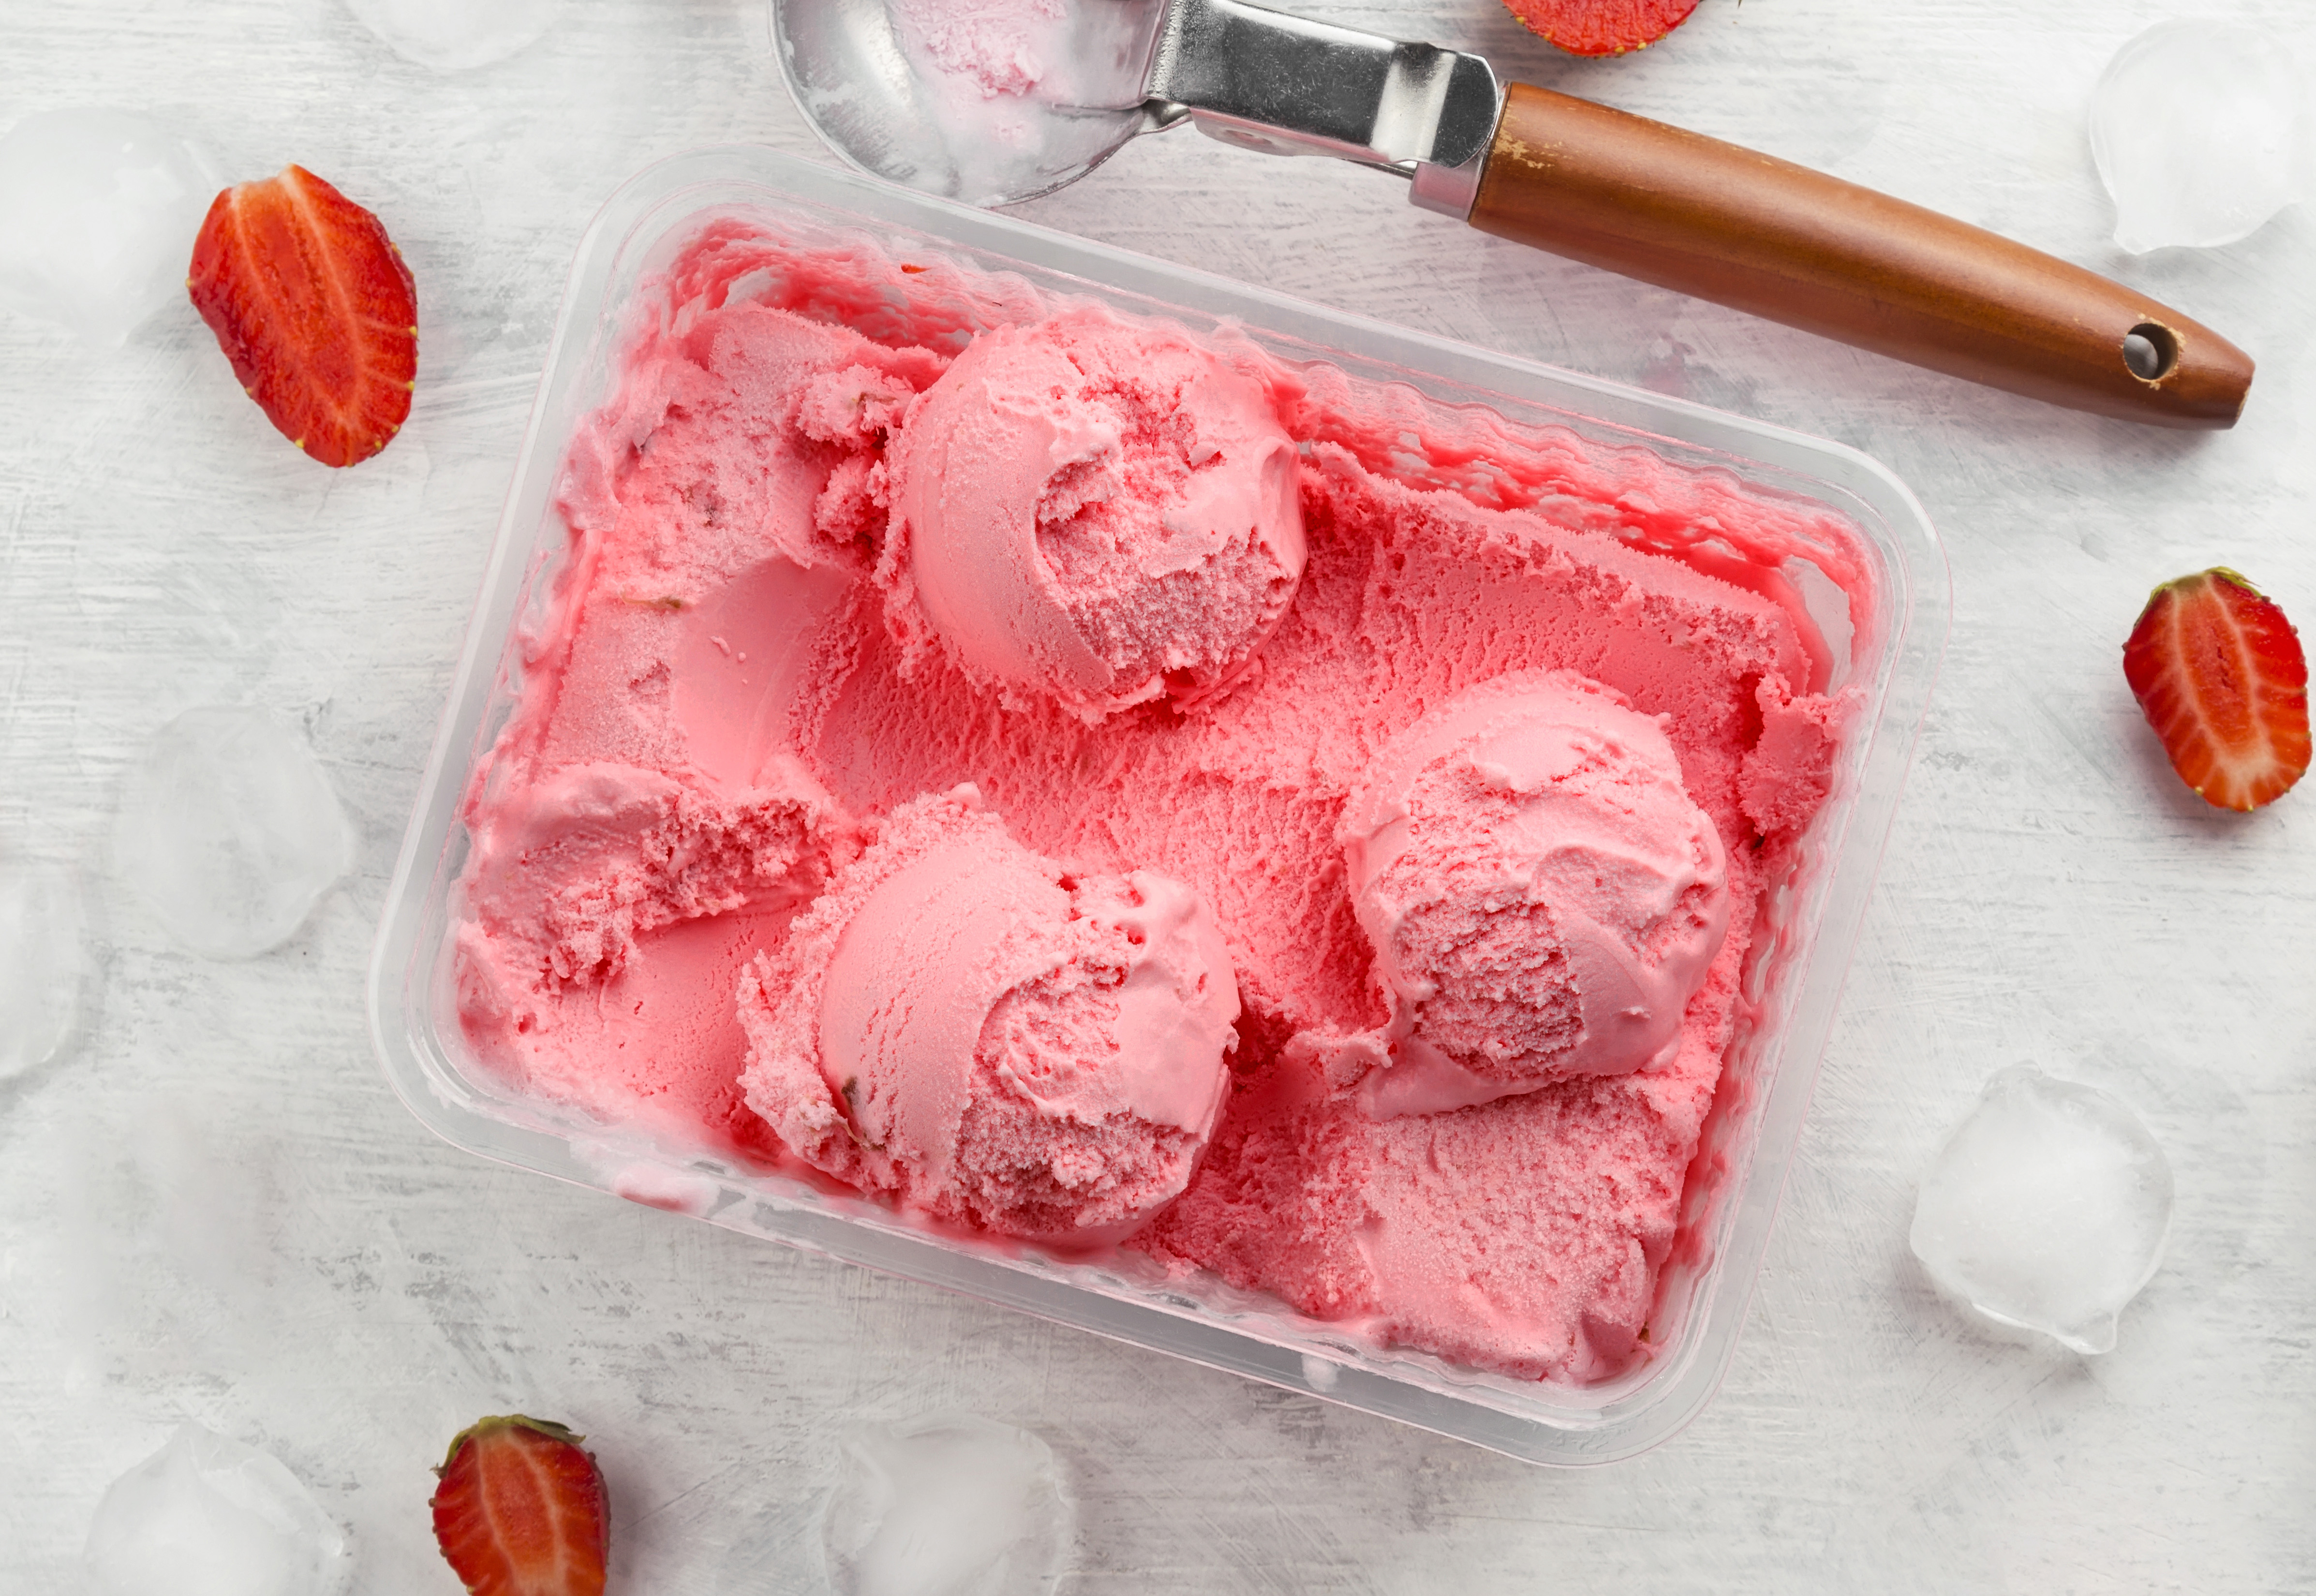 https://prod-app.breville.com/original/recipe/1650606254/Fresh+Strawberry+Ice+cream.jpg